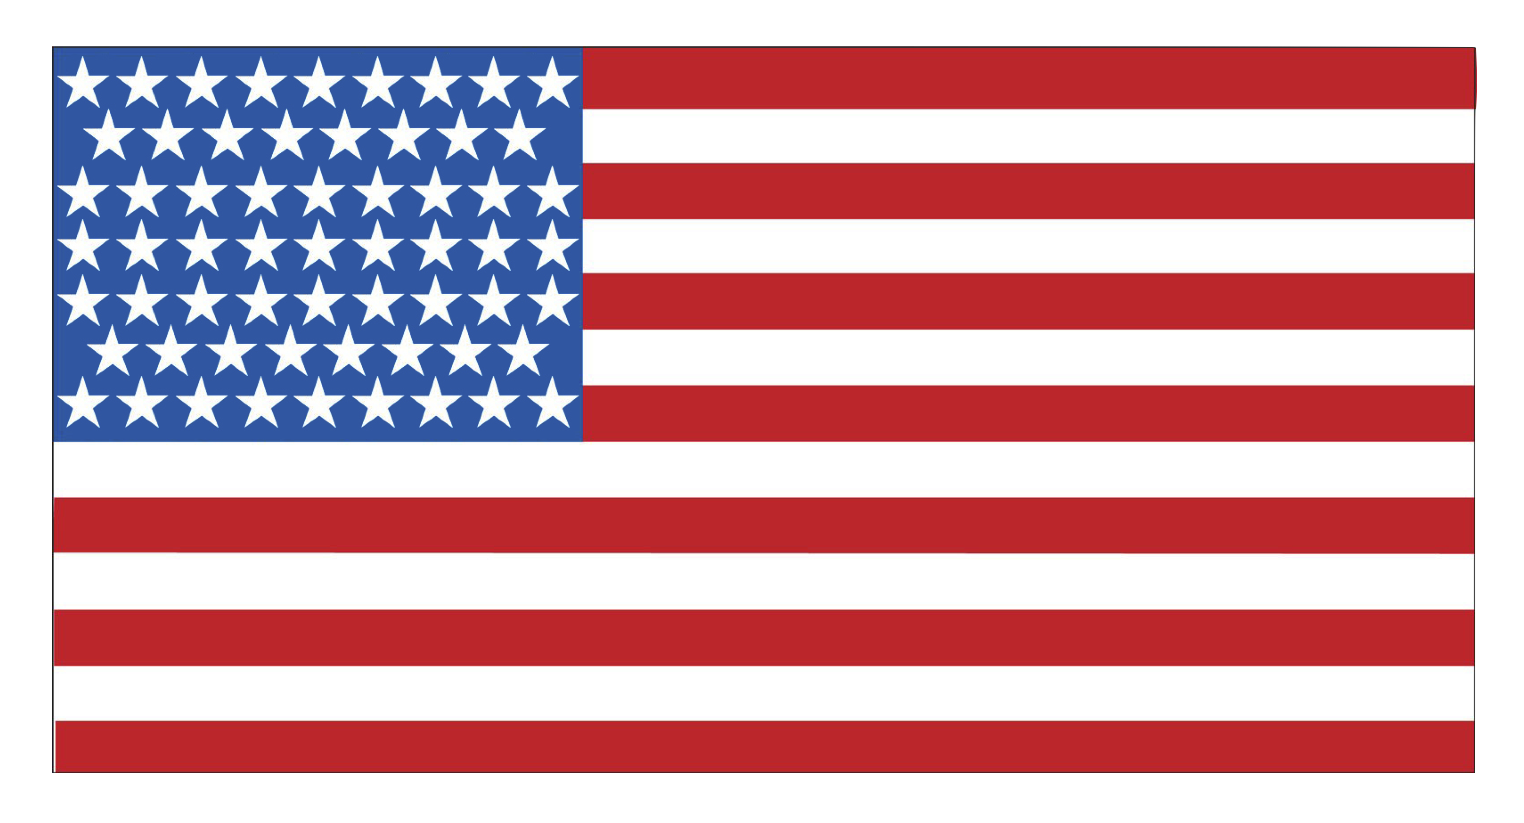 Printable American Flag Images